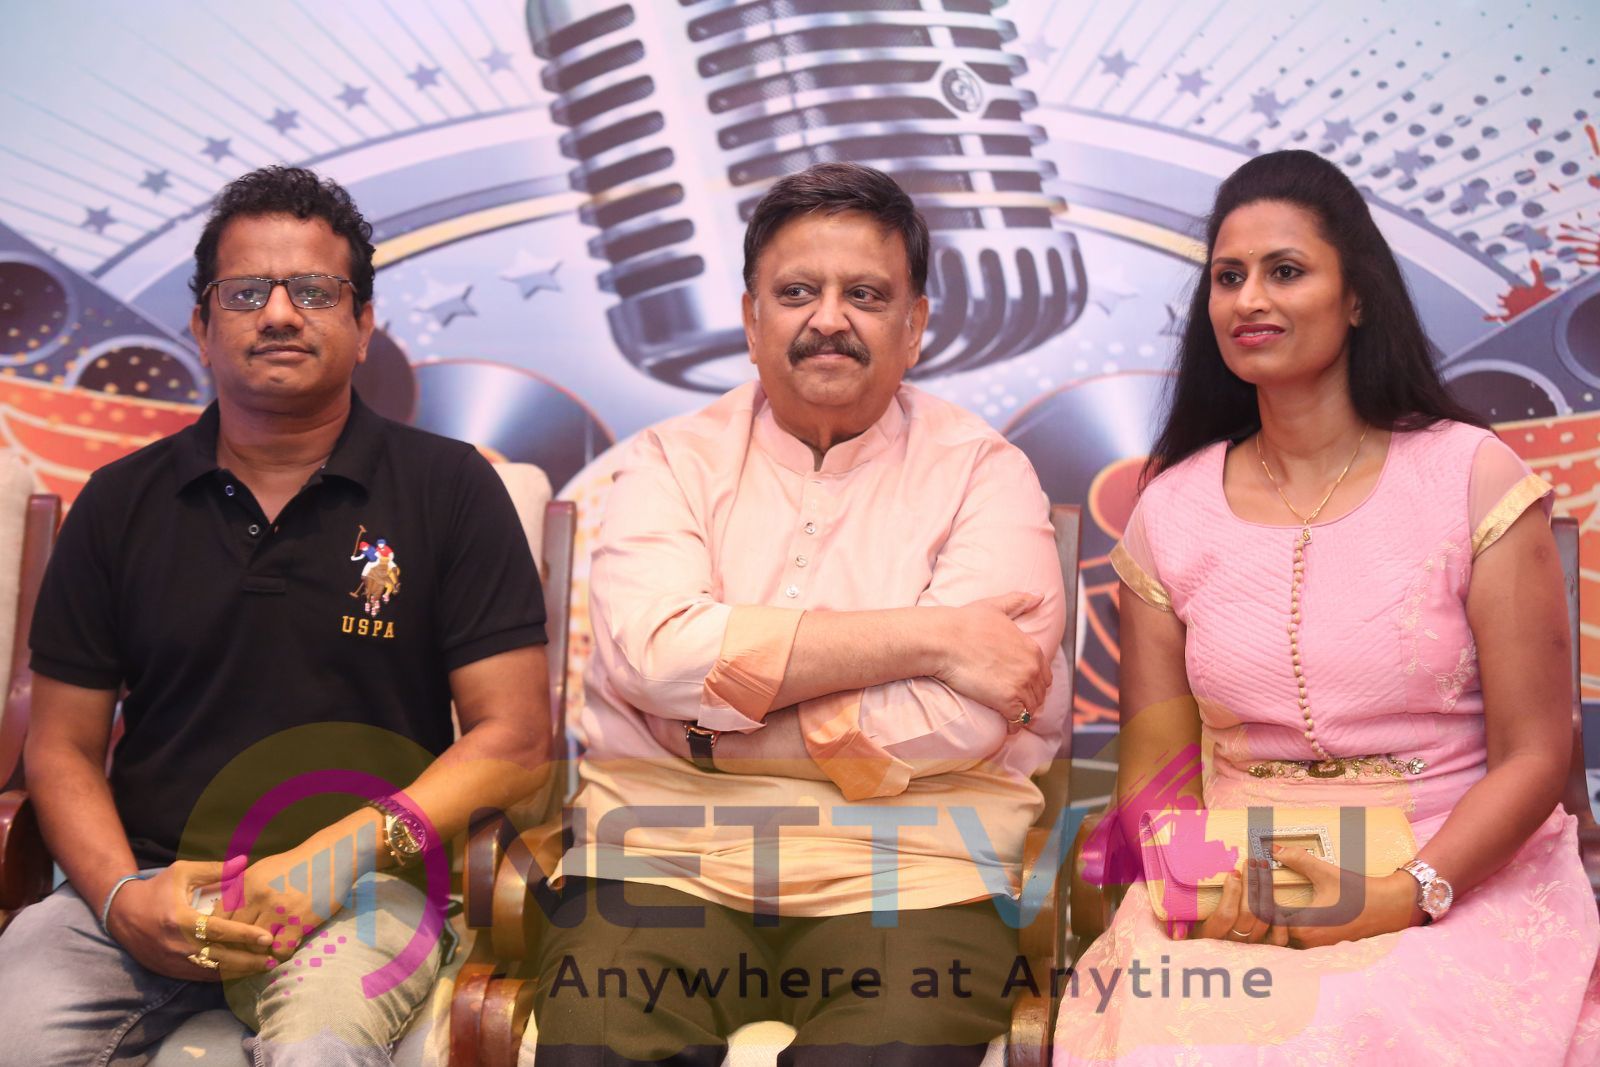 Indian Singers Rights Association Press Meet Photos Telugu Gallery